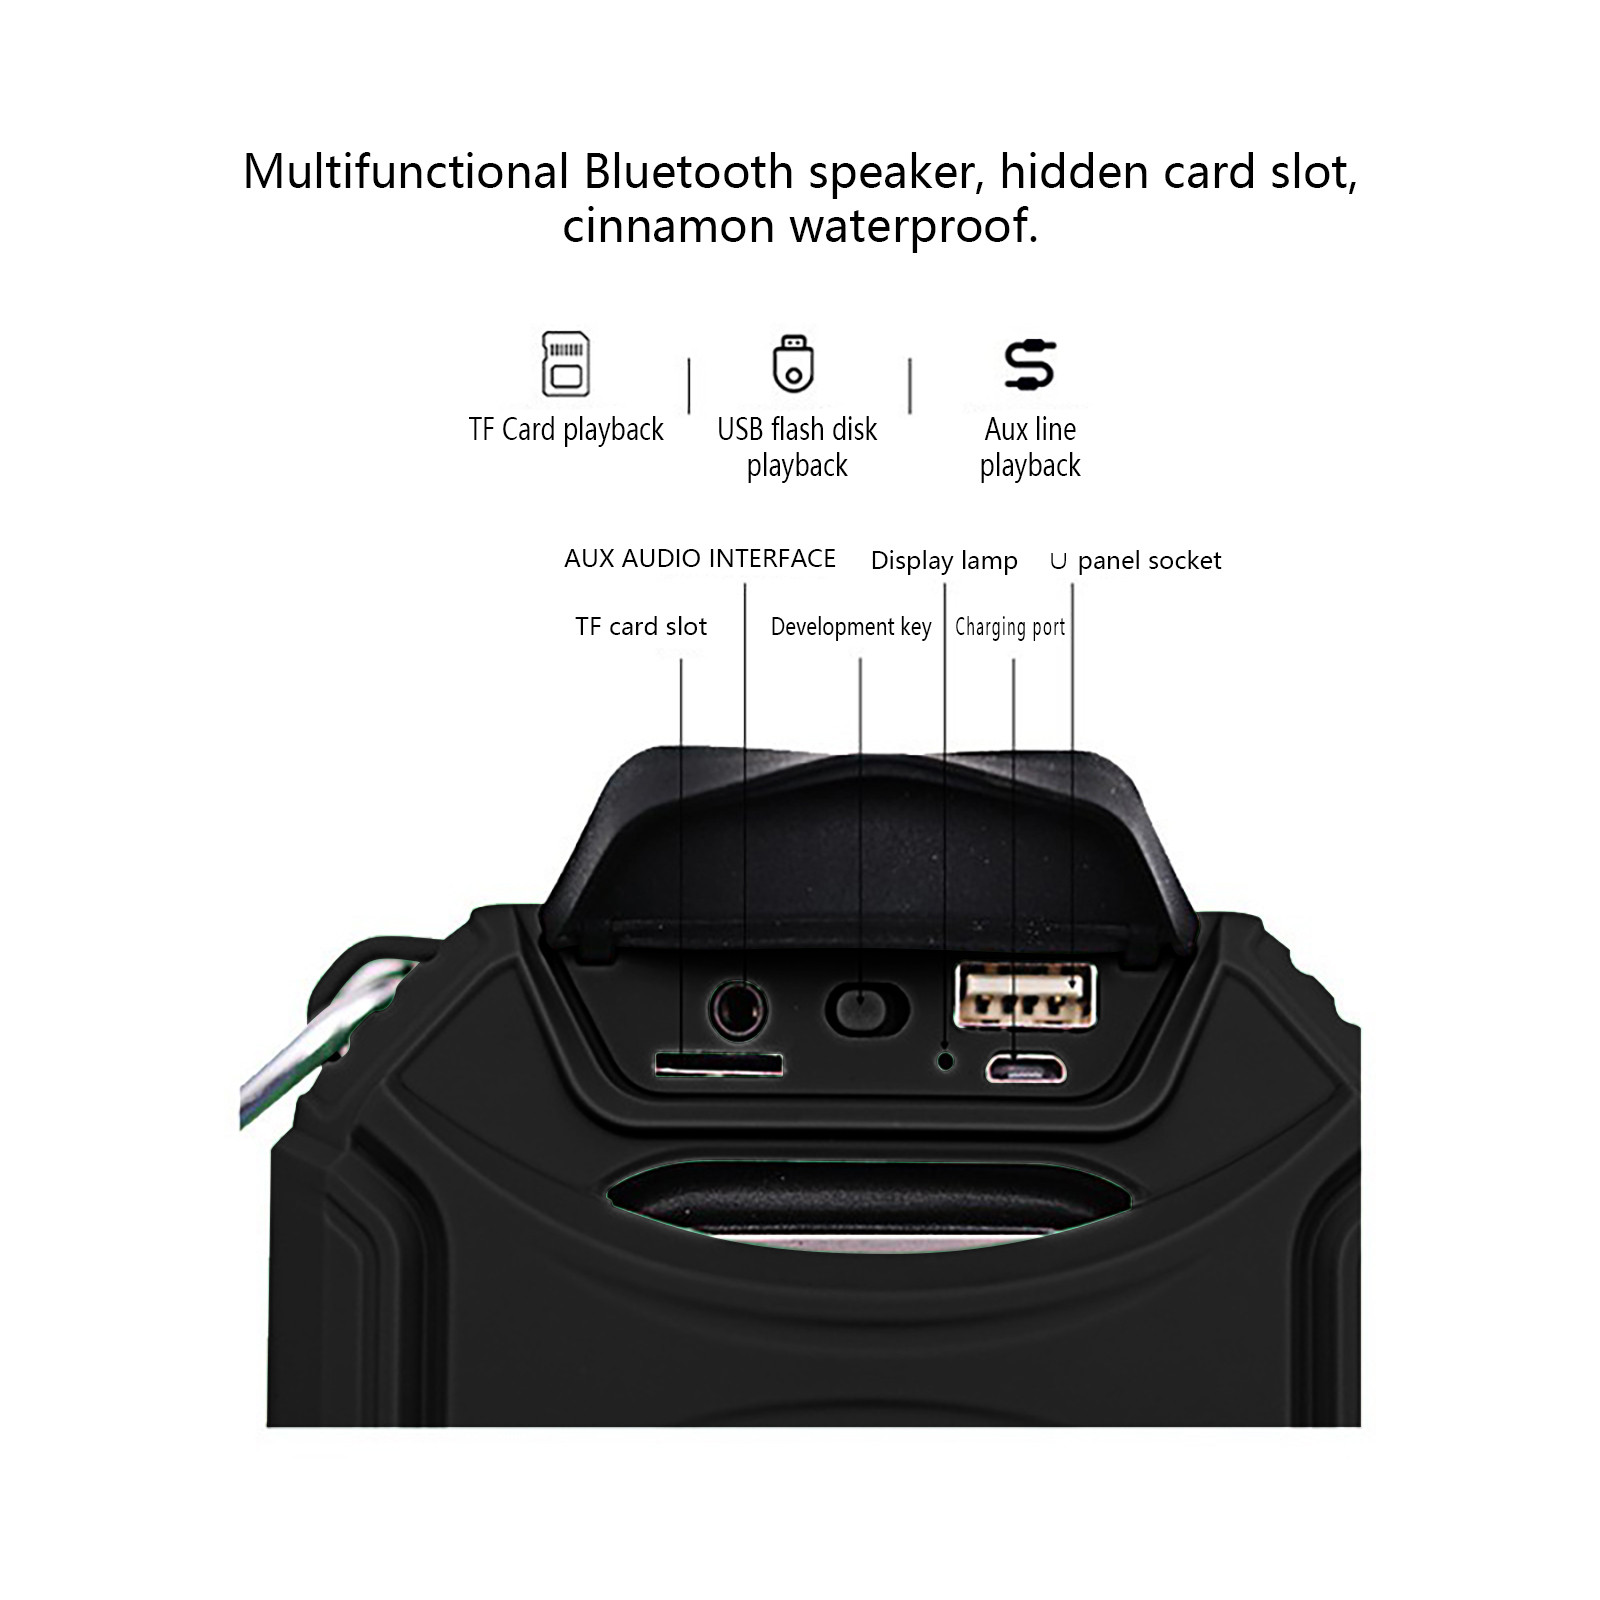 WSBDENLK Clearance Sale Waterproof Bluetooth Speaker Outdoor Portable Subwoofer, Portable Wireless Shower Speaker, Wireless Stereo, Ipx 6 Waterproof Wireless Bluetooth Speaker Bluetooth Speakers - image 4 of 8